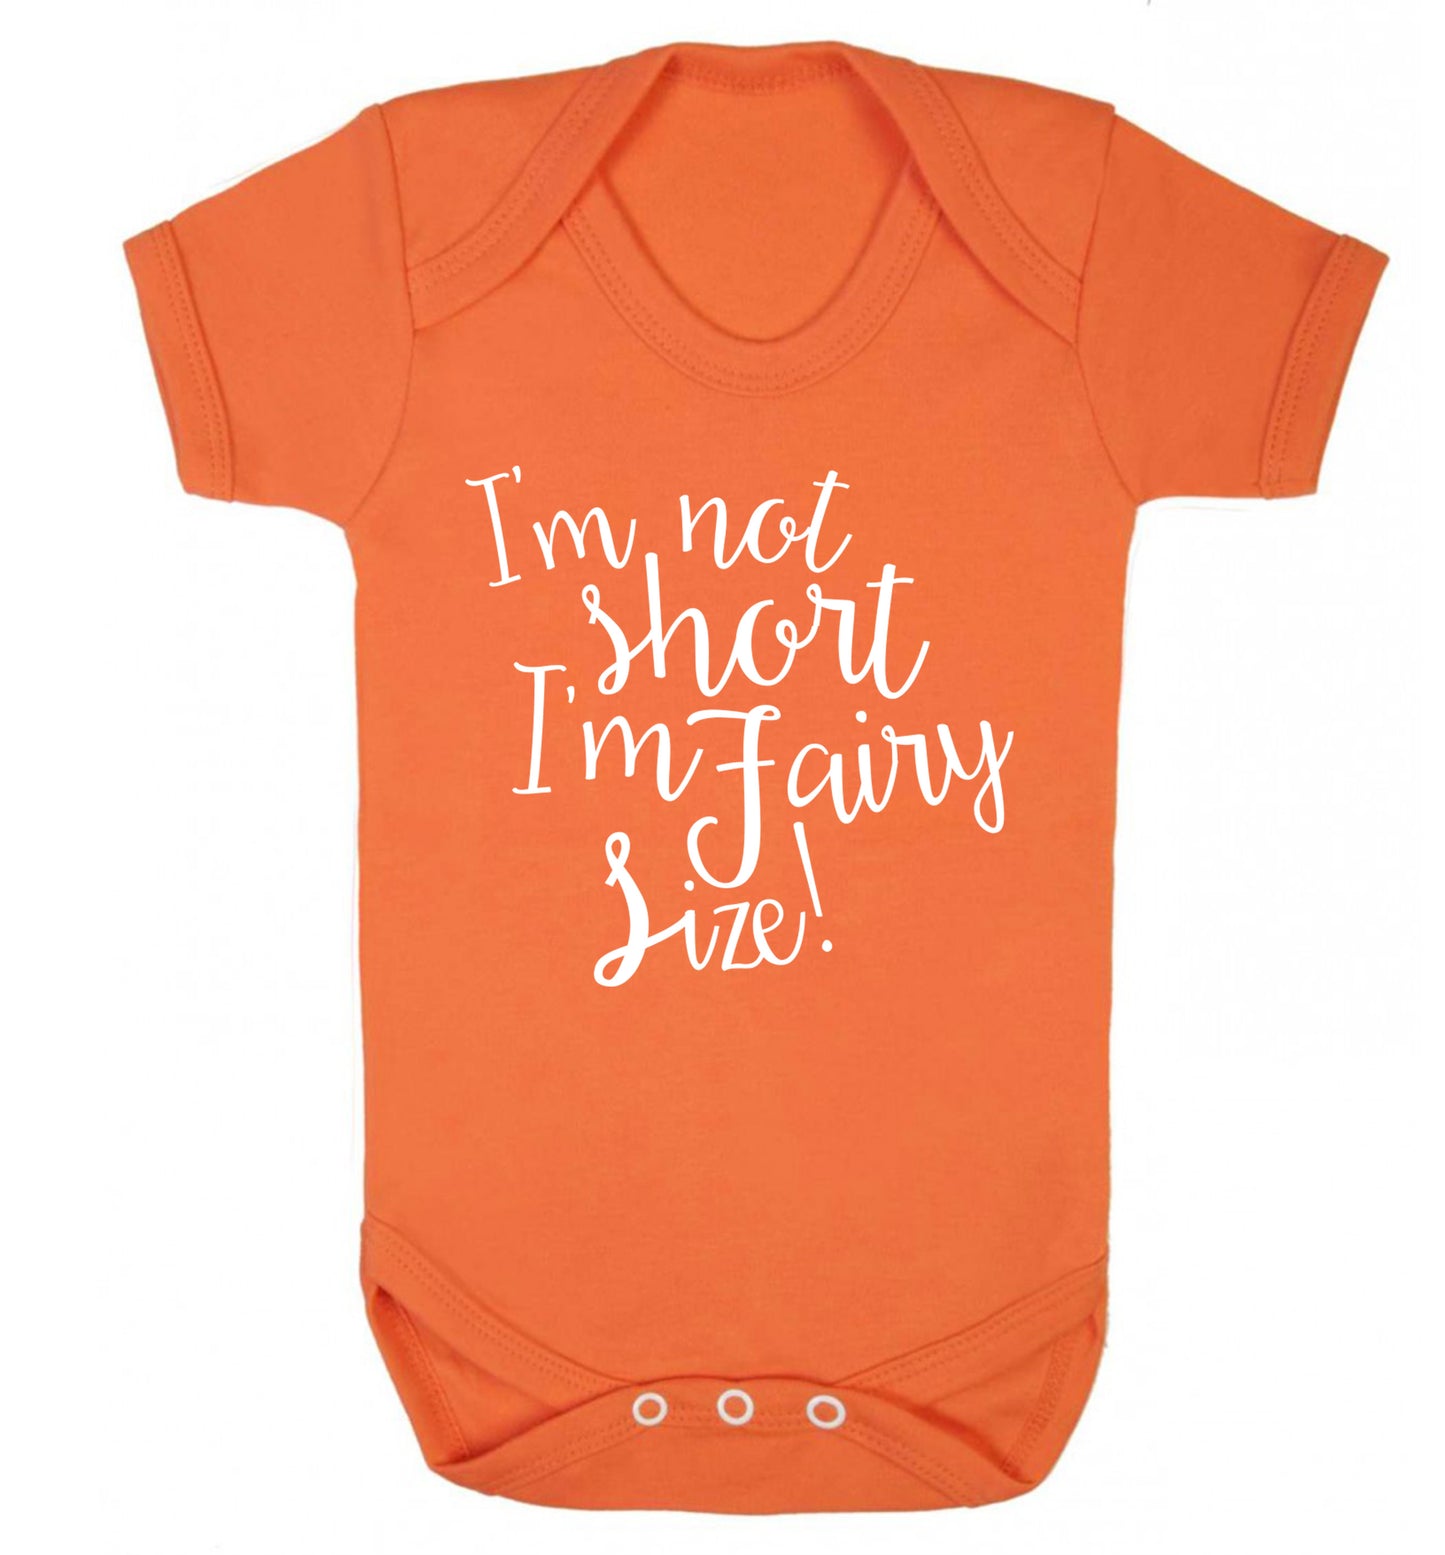 I'm not short I'm fairy sized! Baby Vest orange 18-24 months